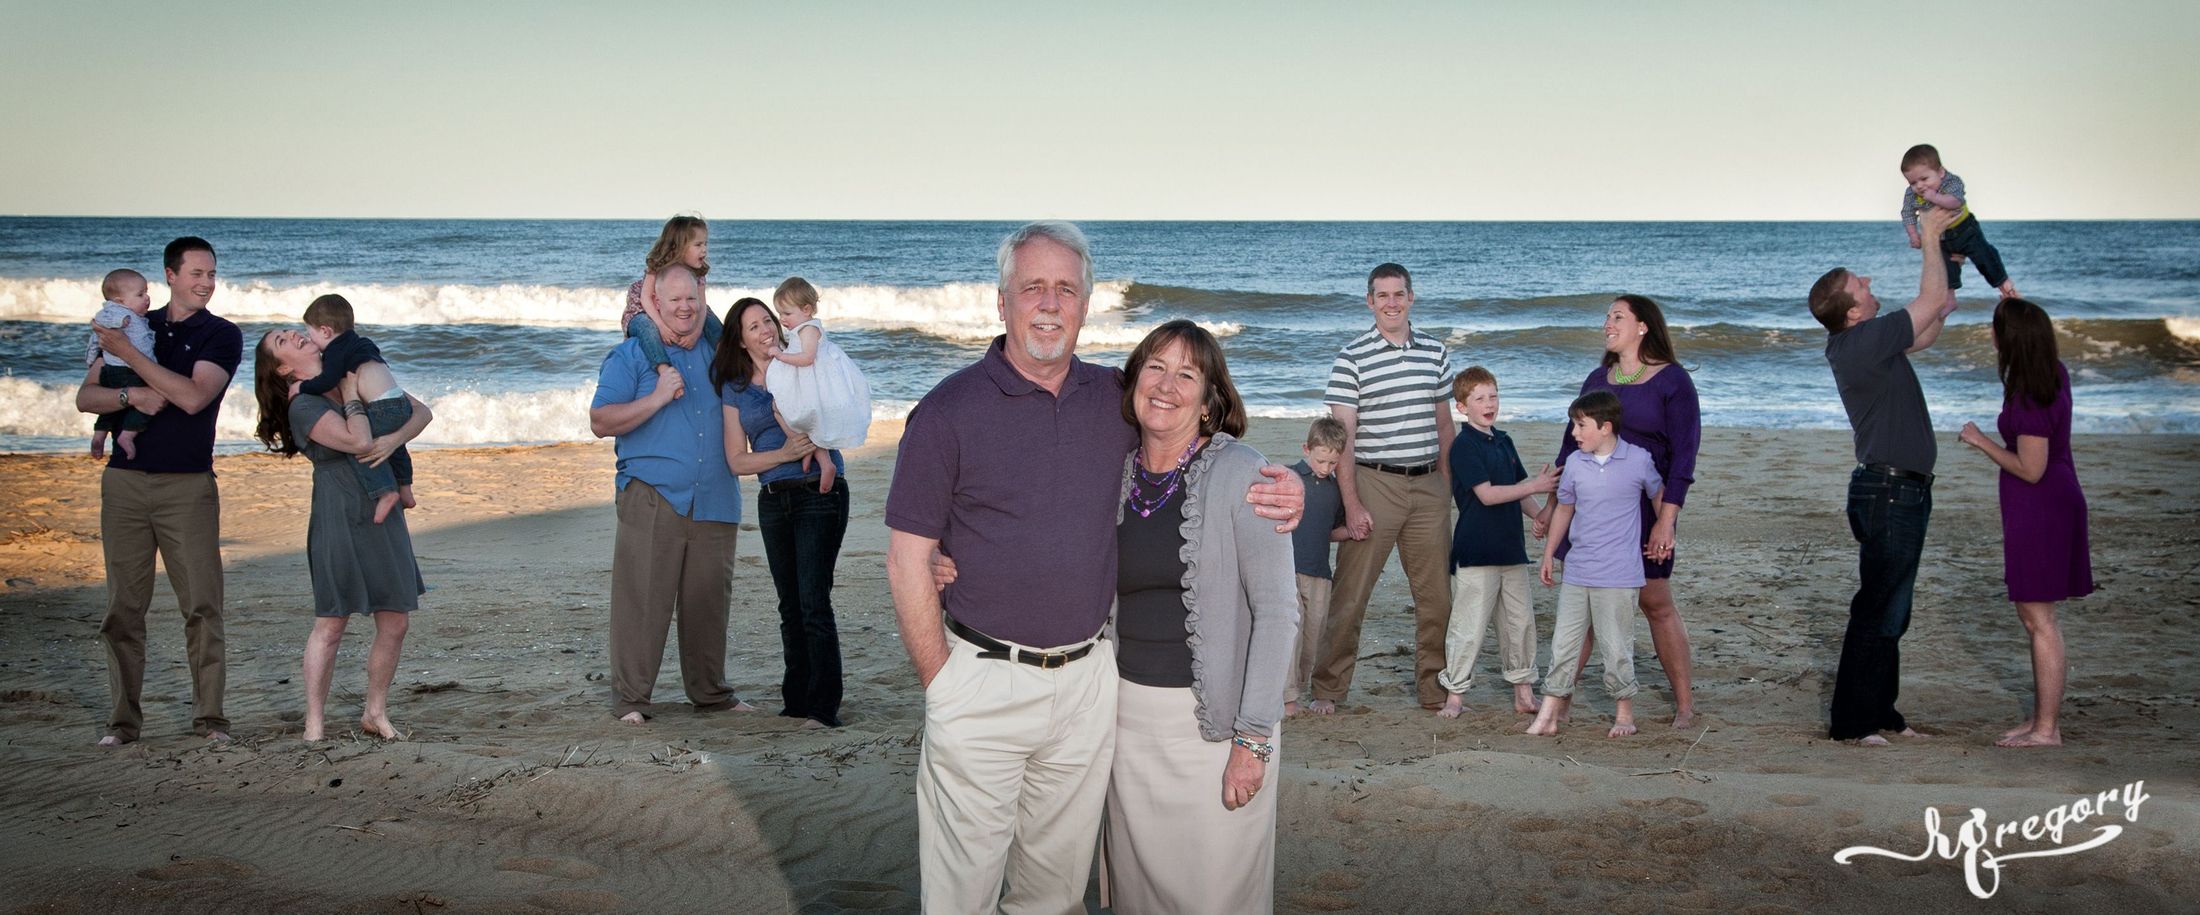 D Ammour multigenerational family reunion virginia beach photograph